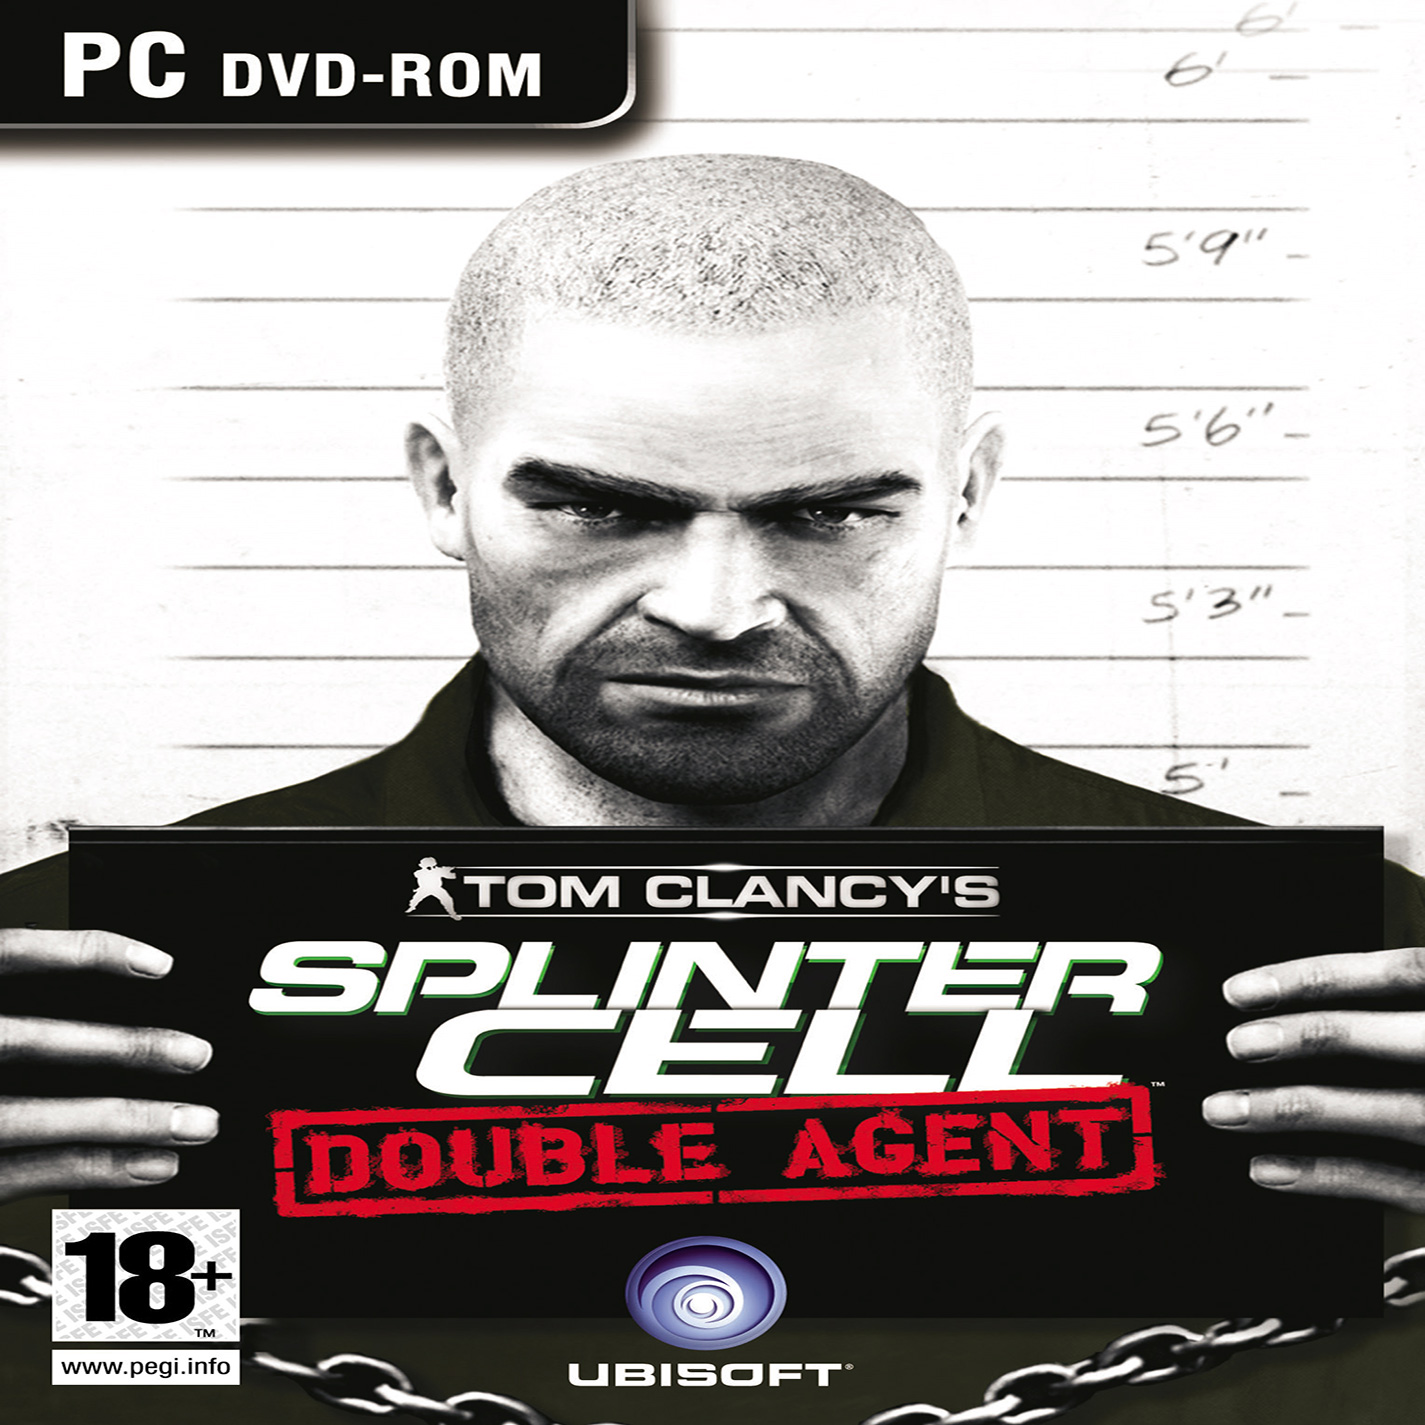 Splinter Cell 4: Double Agent - pedn CD obal